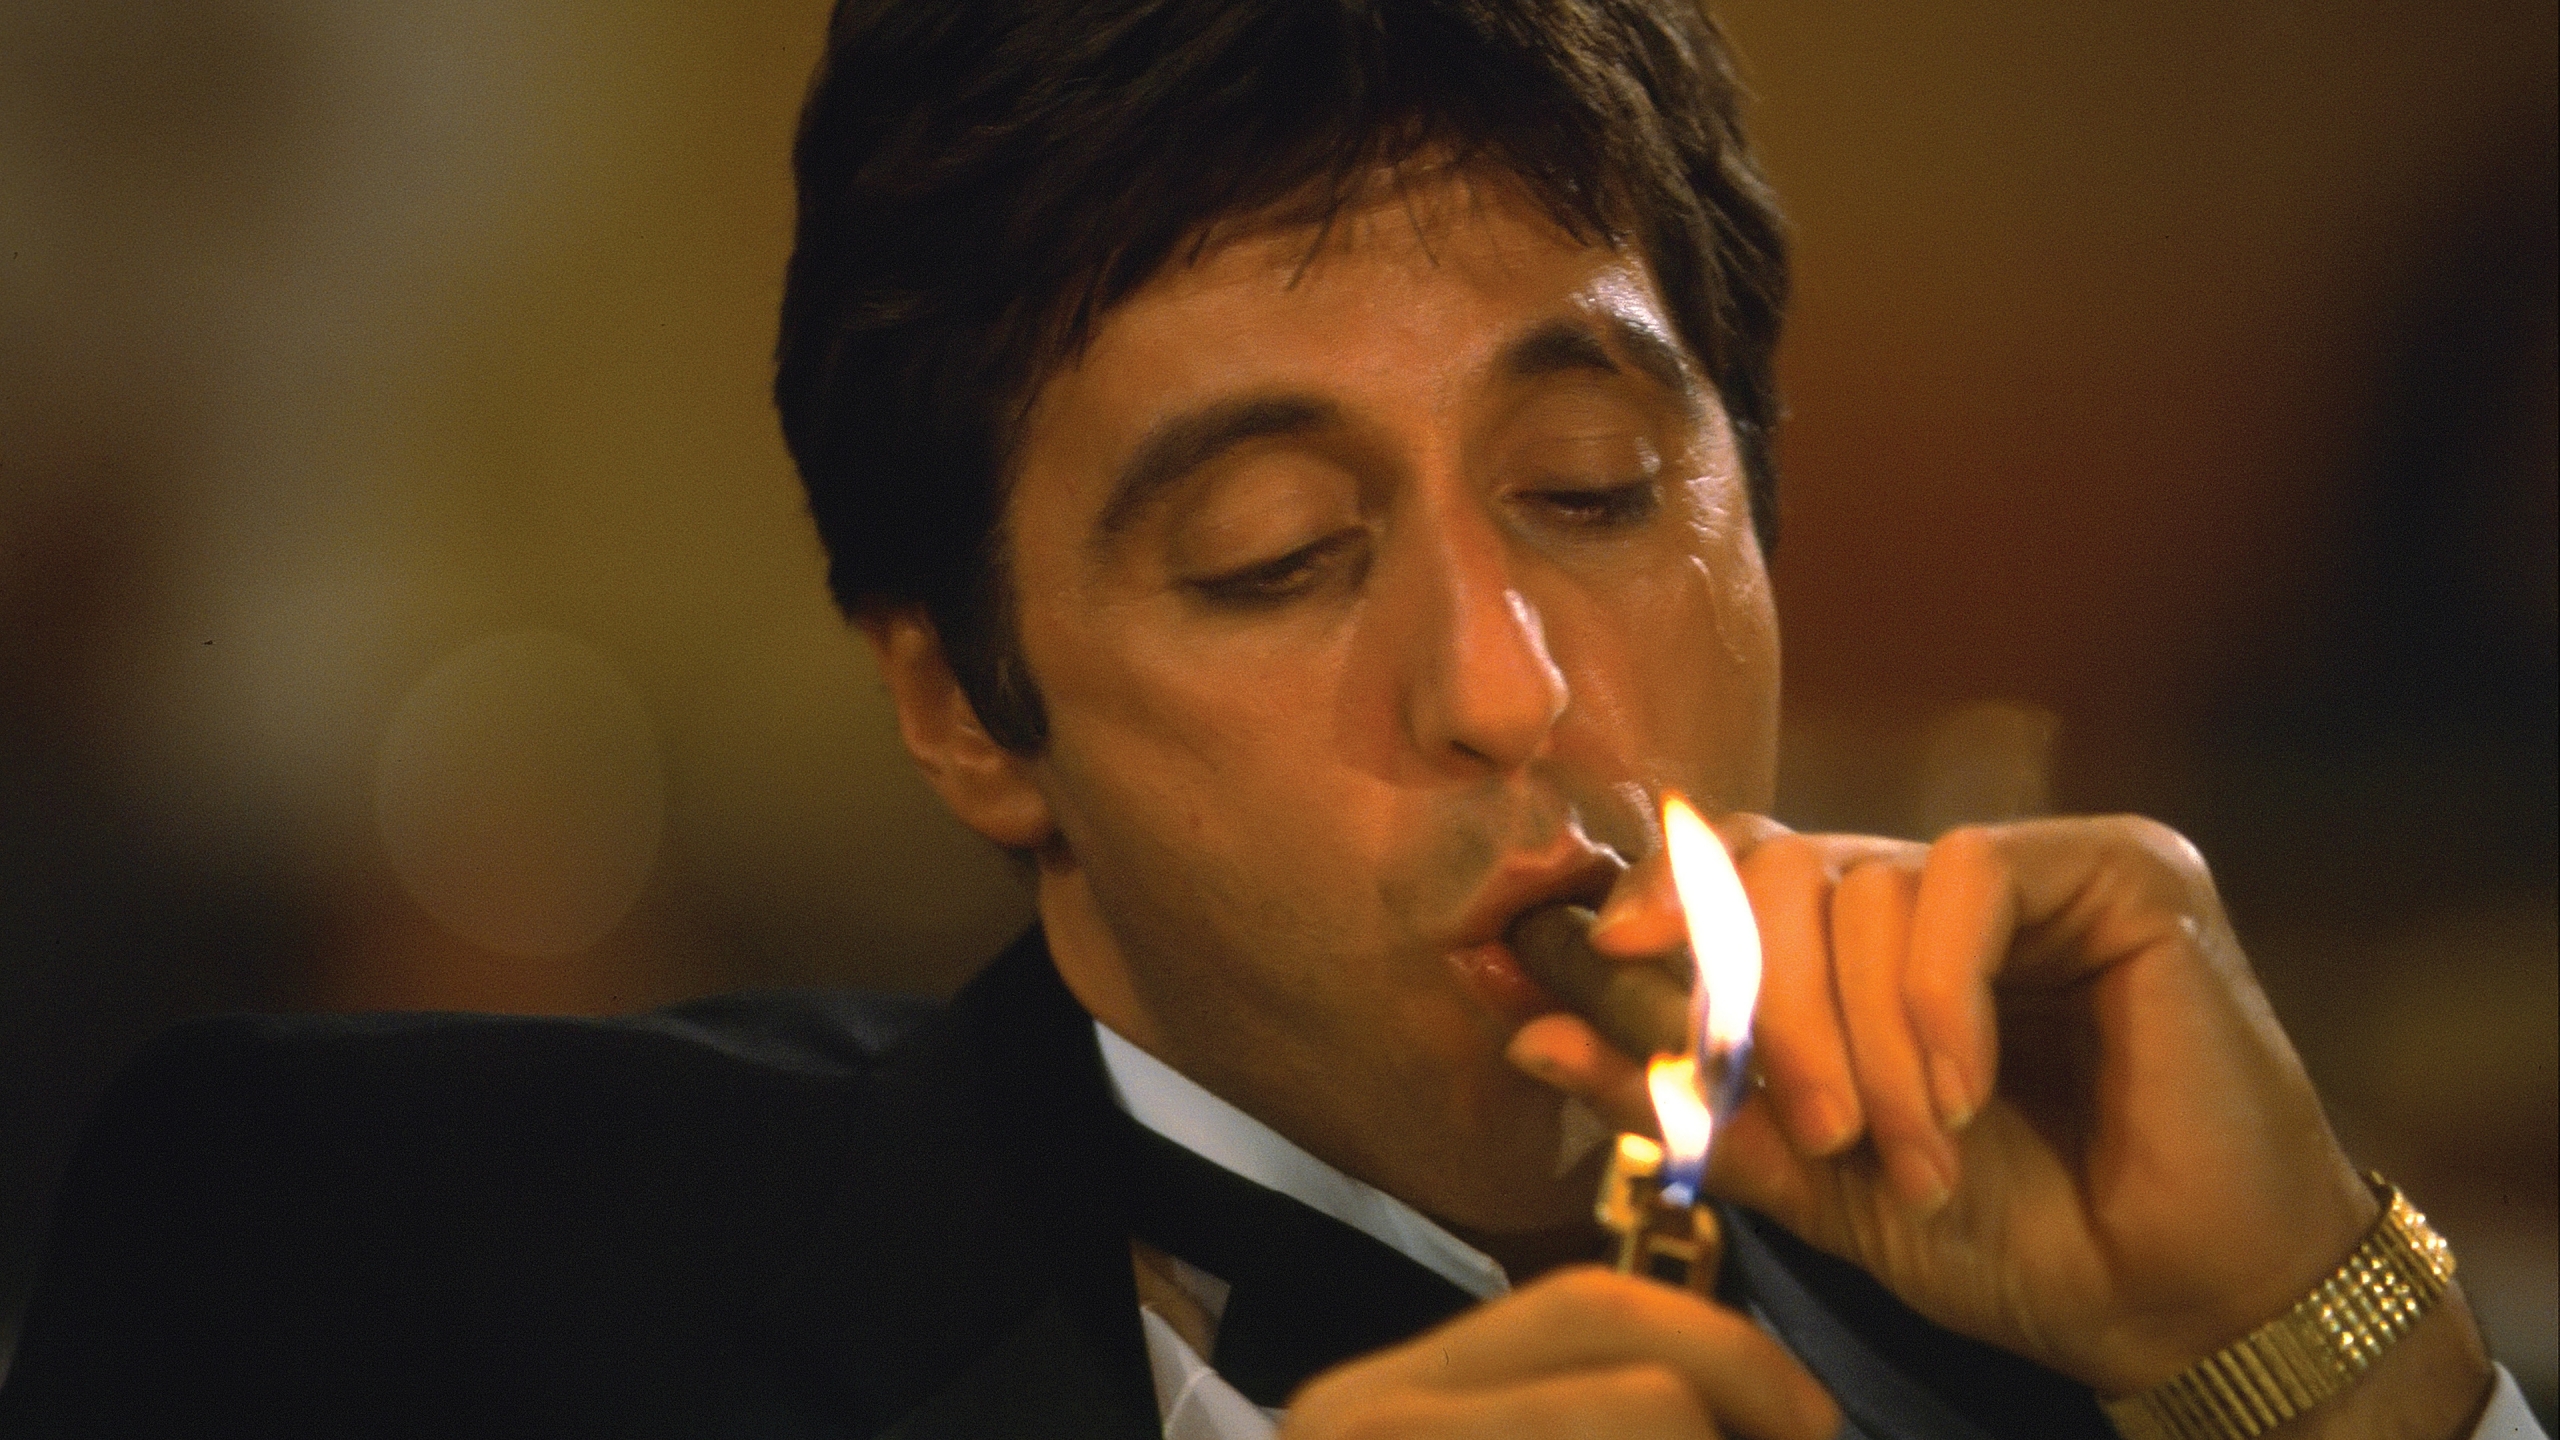 Tony Montana Smoking for 2560x1440 HDTV resolution